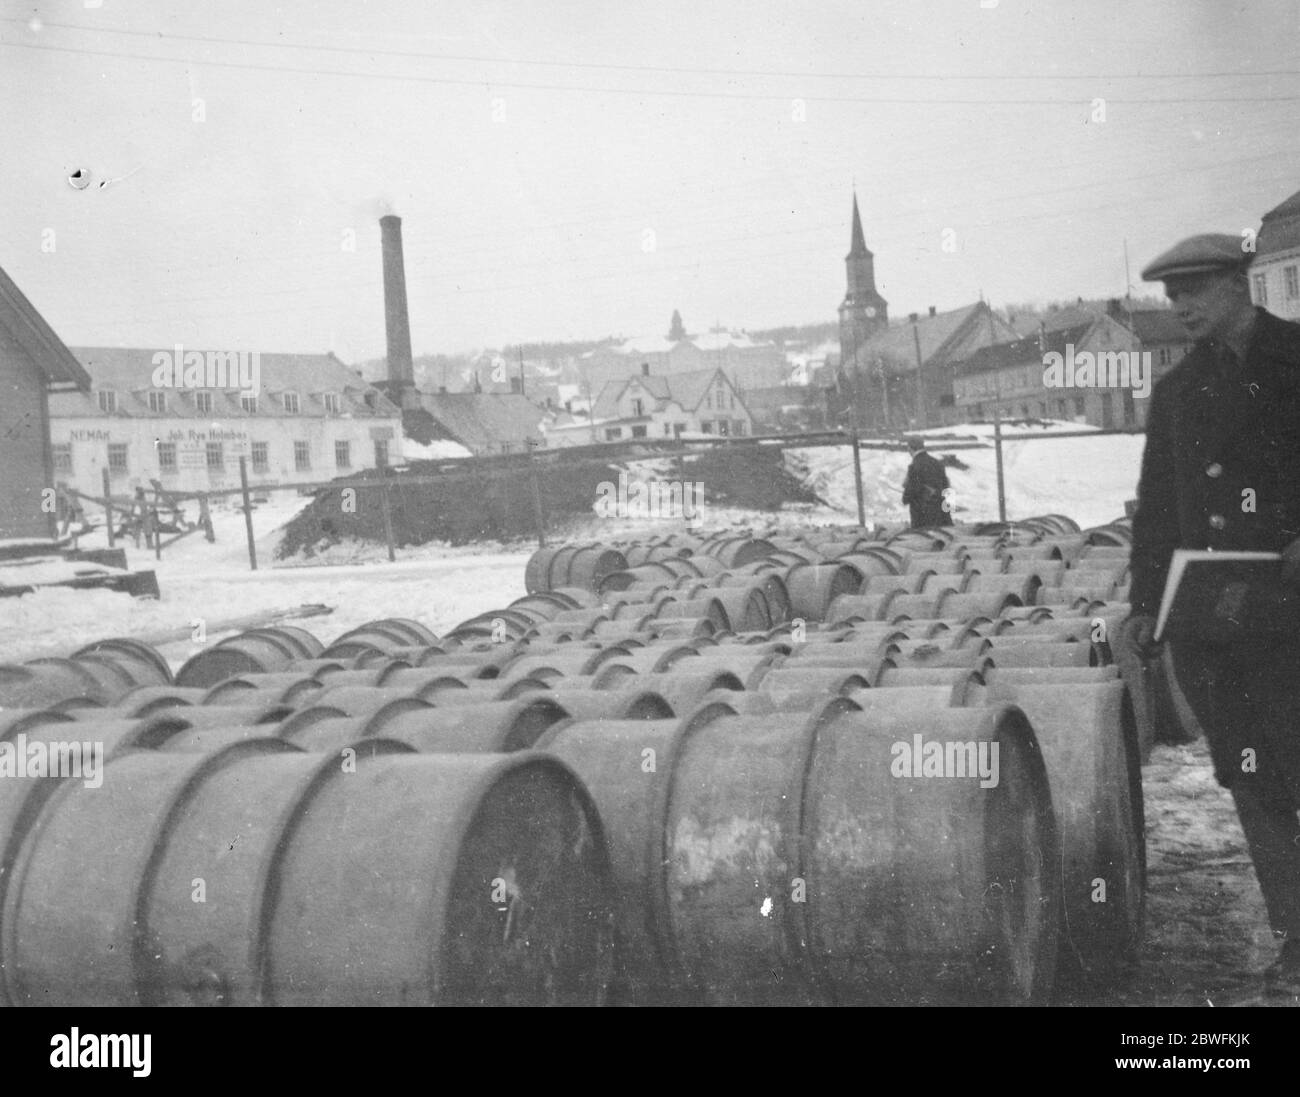 Amundsen Ellsworth Polar Flight Petrol barrels on the quay at Narvik. They contain the petrol supplies for the flight 14 April 1925 Stock Photo